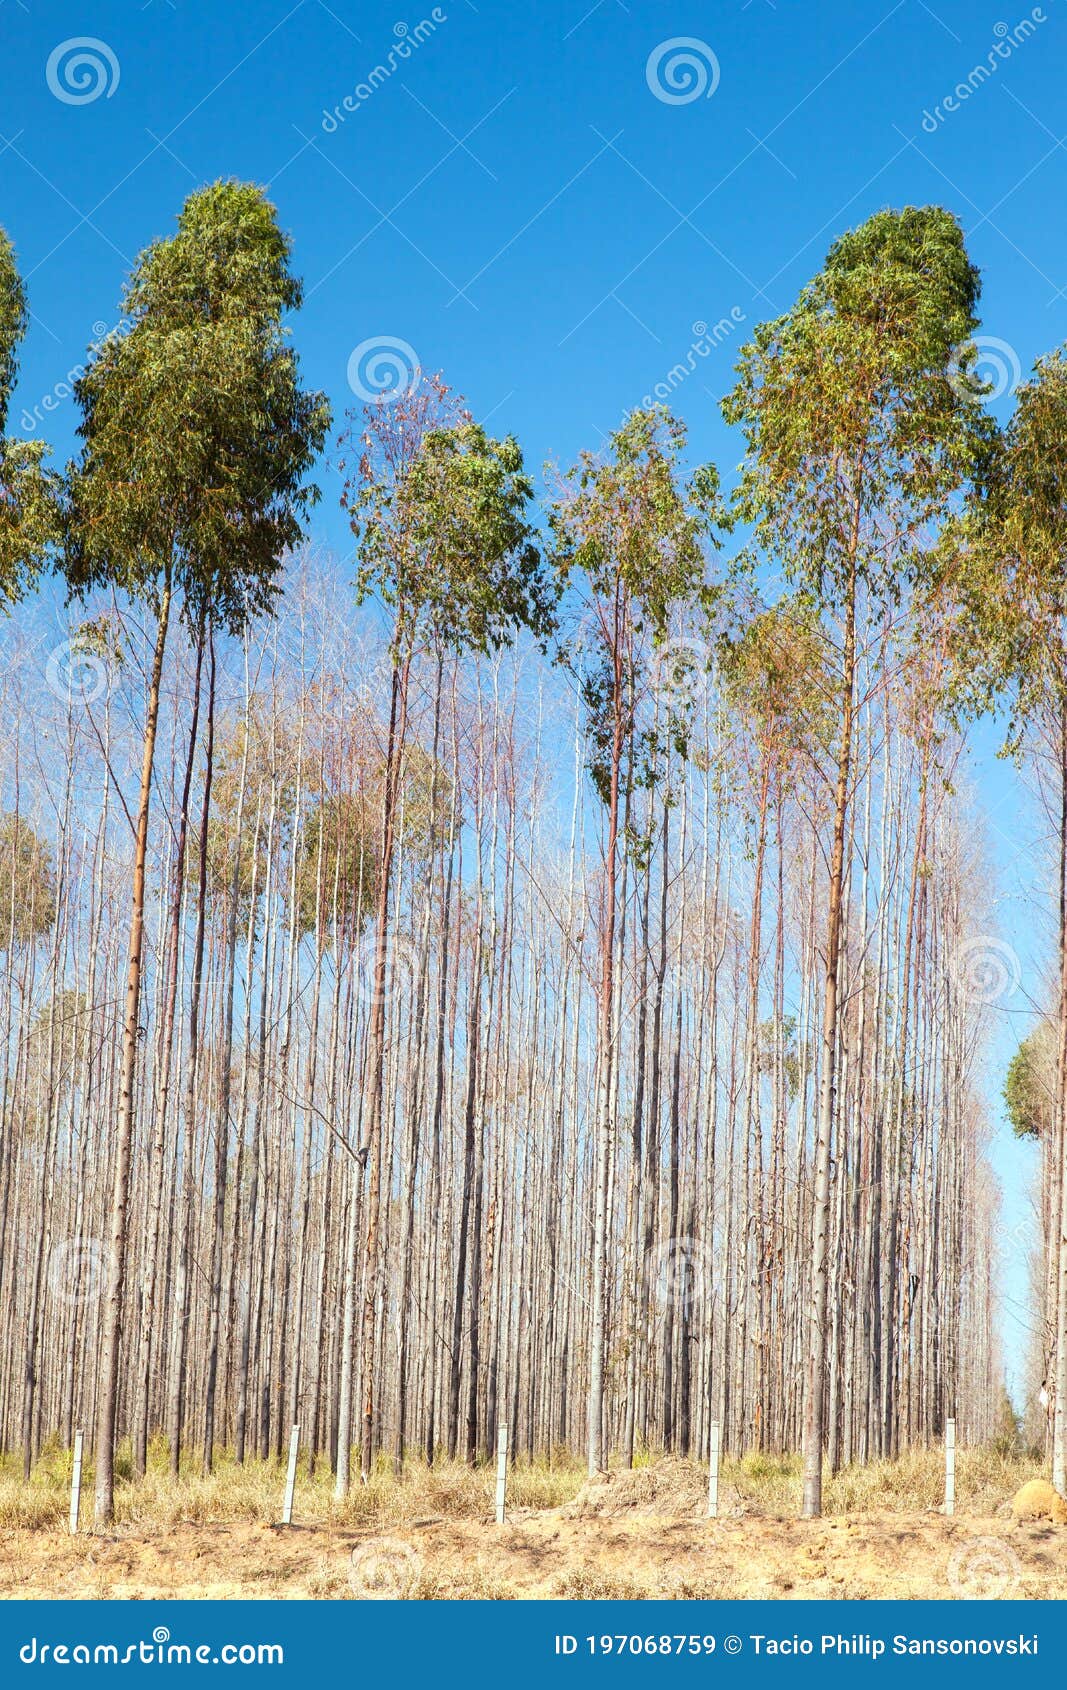 Eucalyptus Trees Plantation with Blue Sky on Background Stock ...